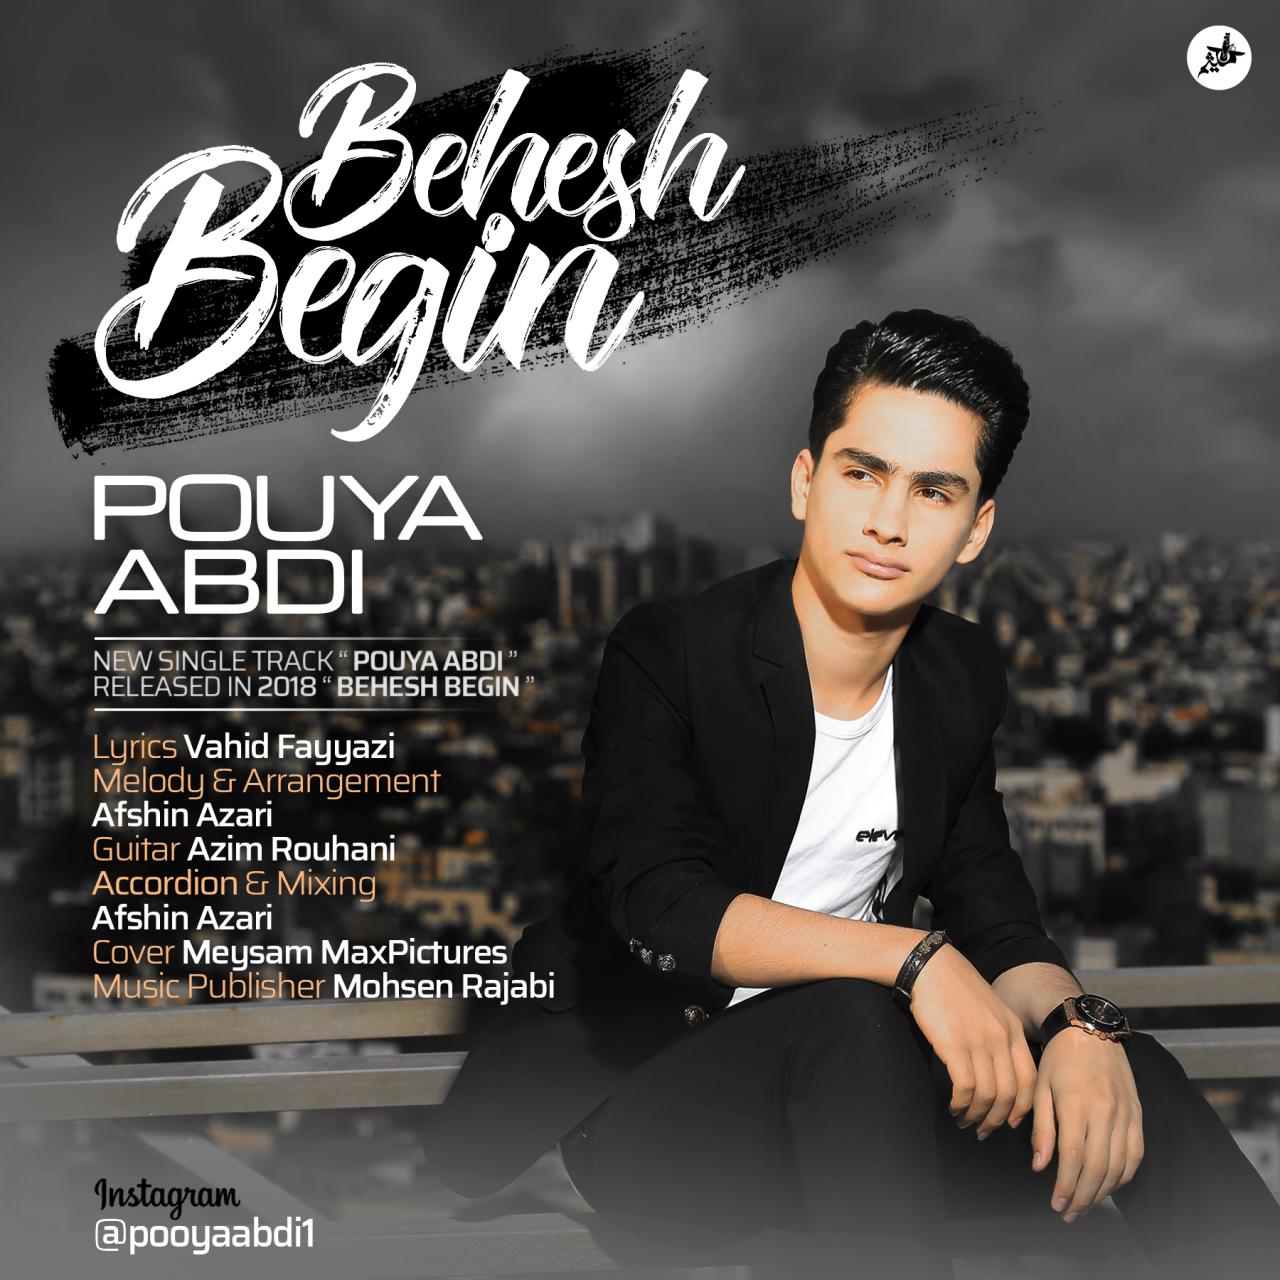  دانلود آهنگ جدید پویا عبدی - بهش بگین | Download New Music By Pouya Abdi - Behesh Begin